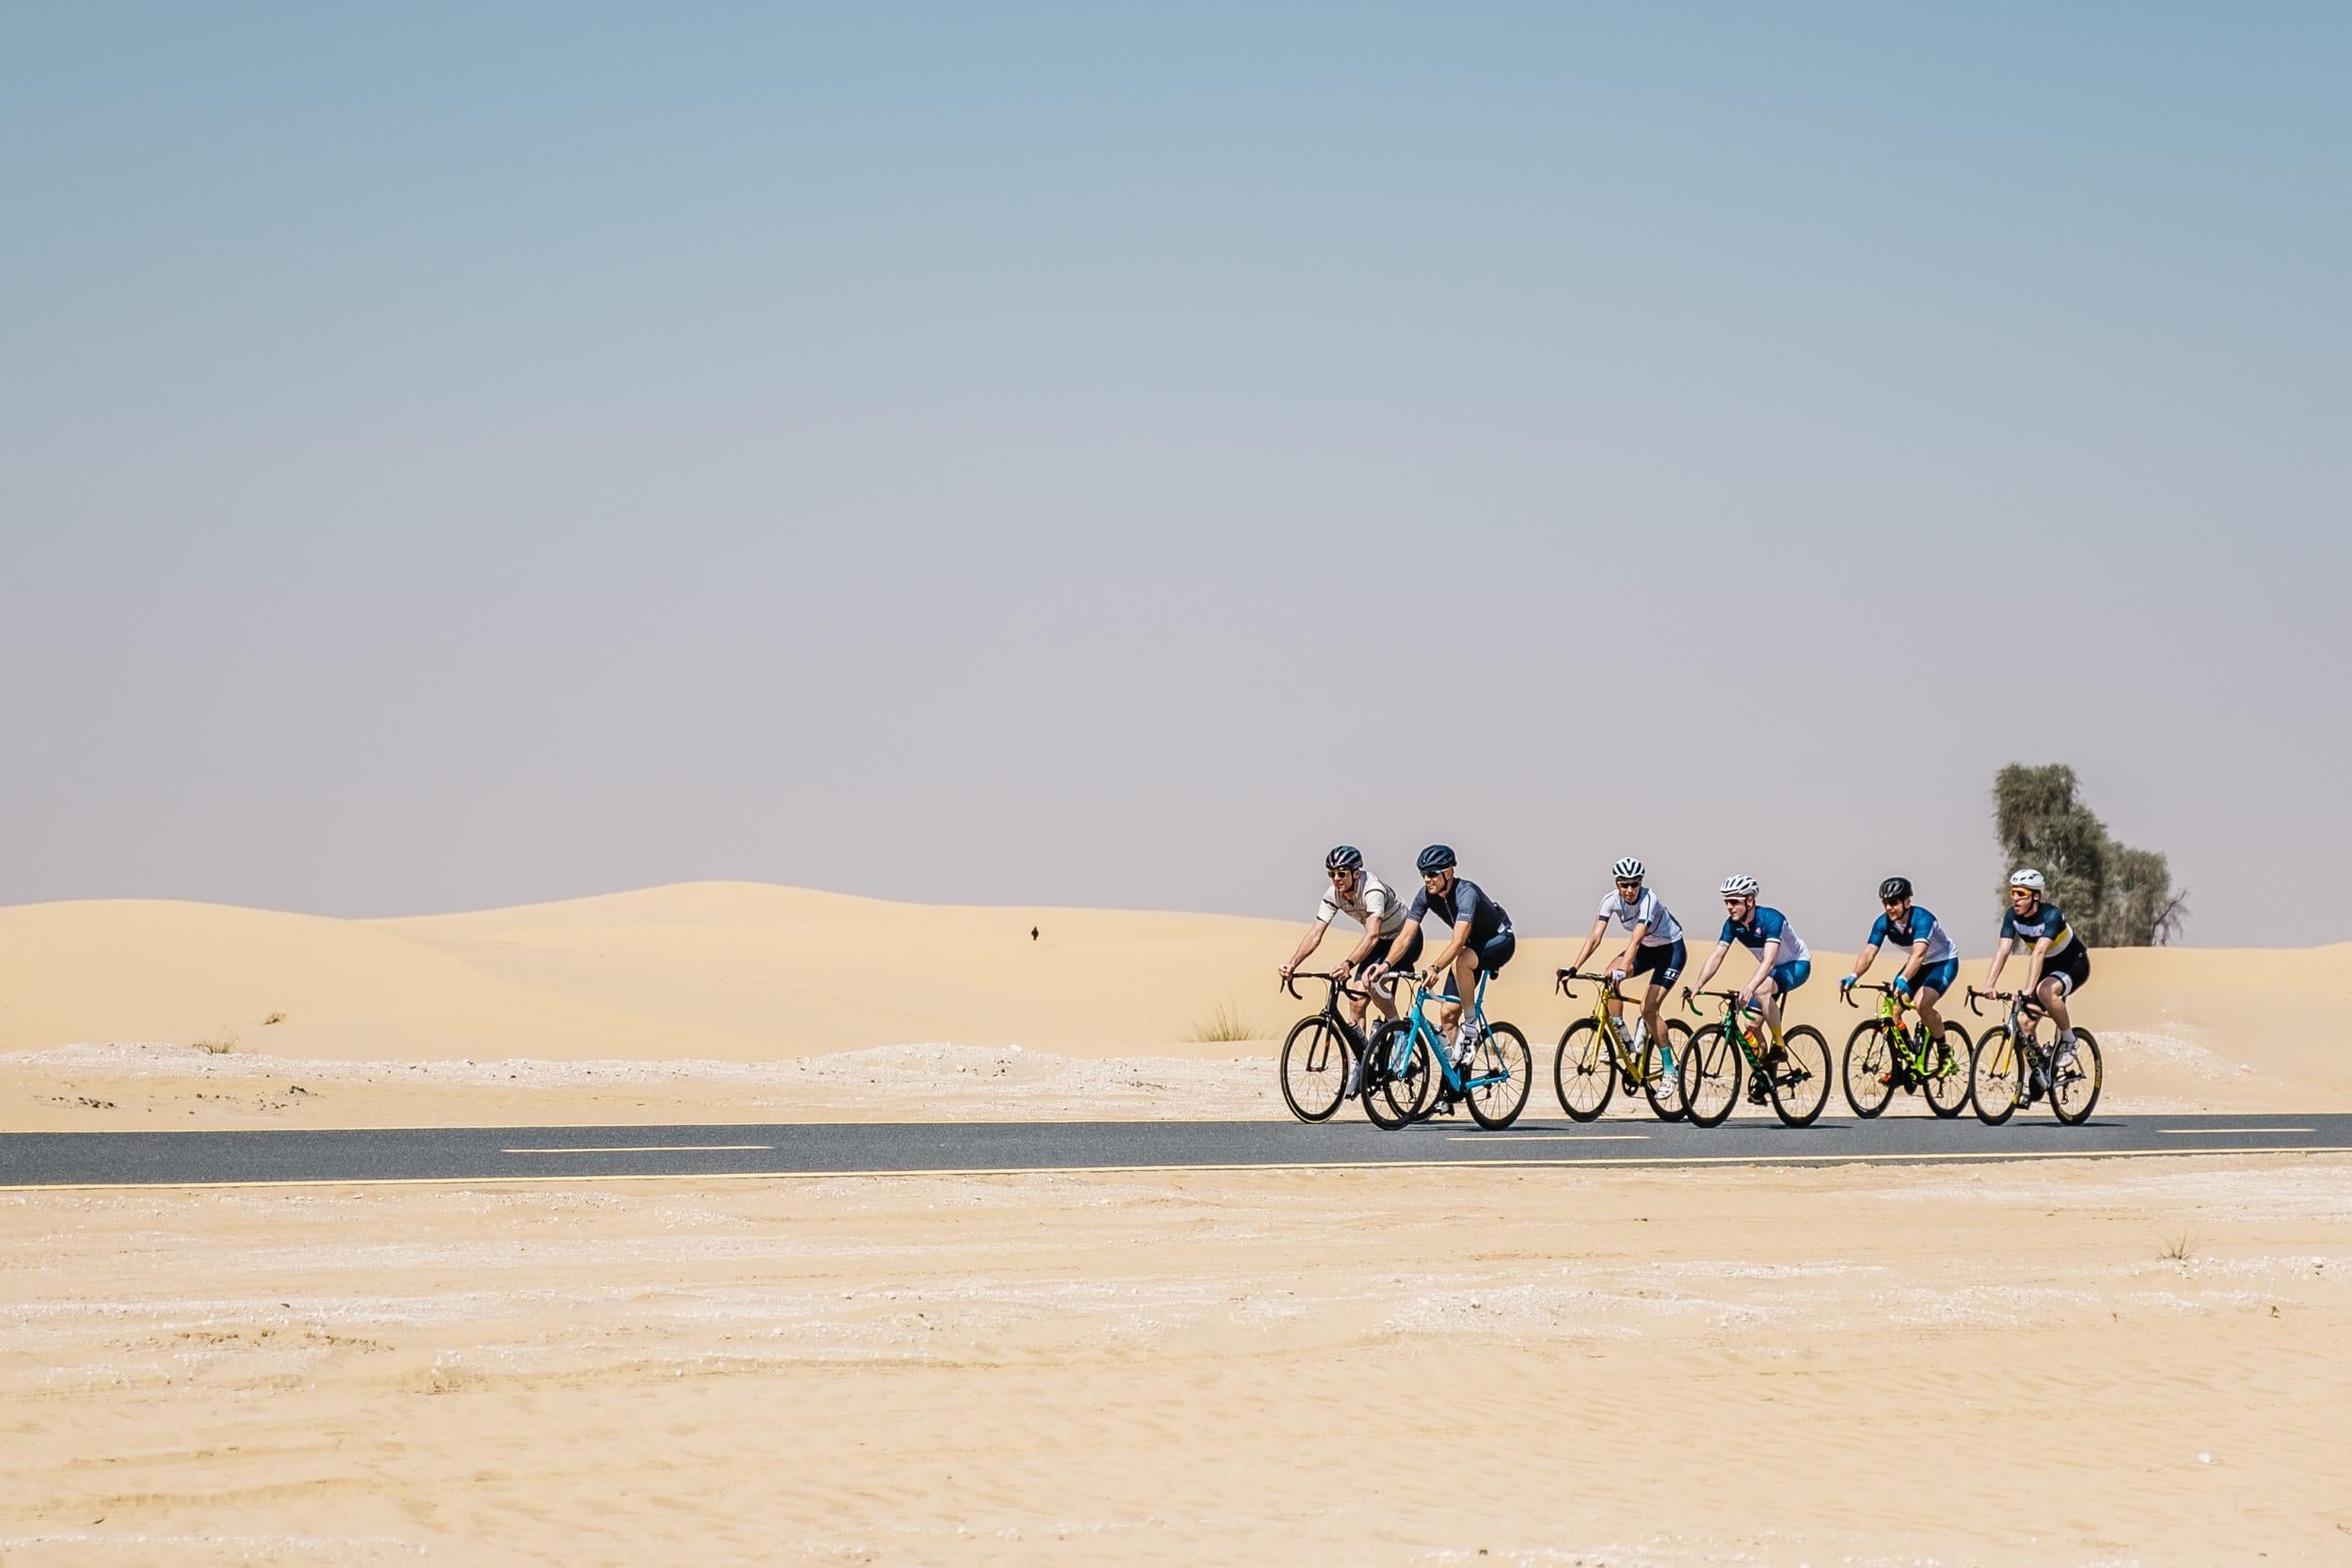 The Al Qudra track takes you through the desert